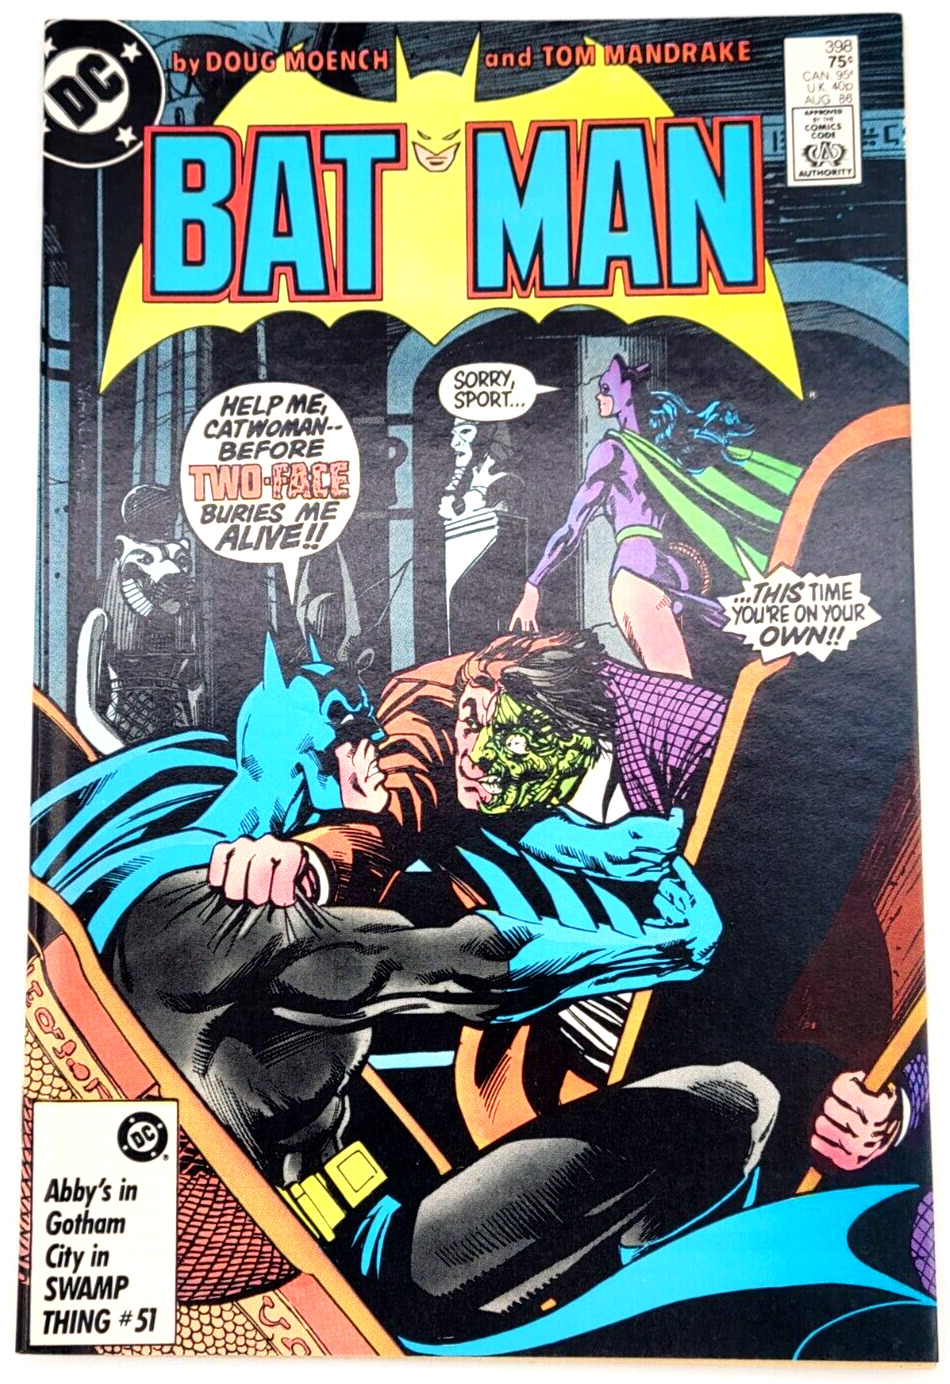 BATMAN #398 (1986) / VF+ / TWO-FACE CATWOMAN DC COMICS